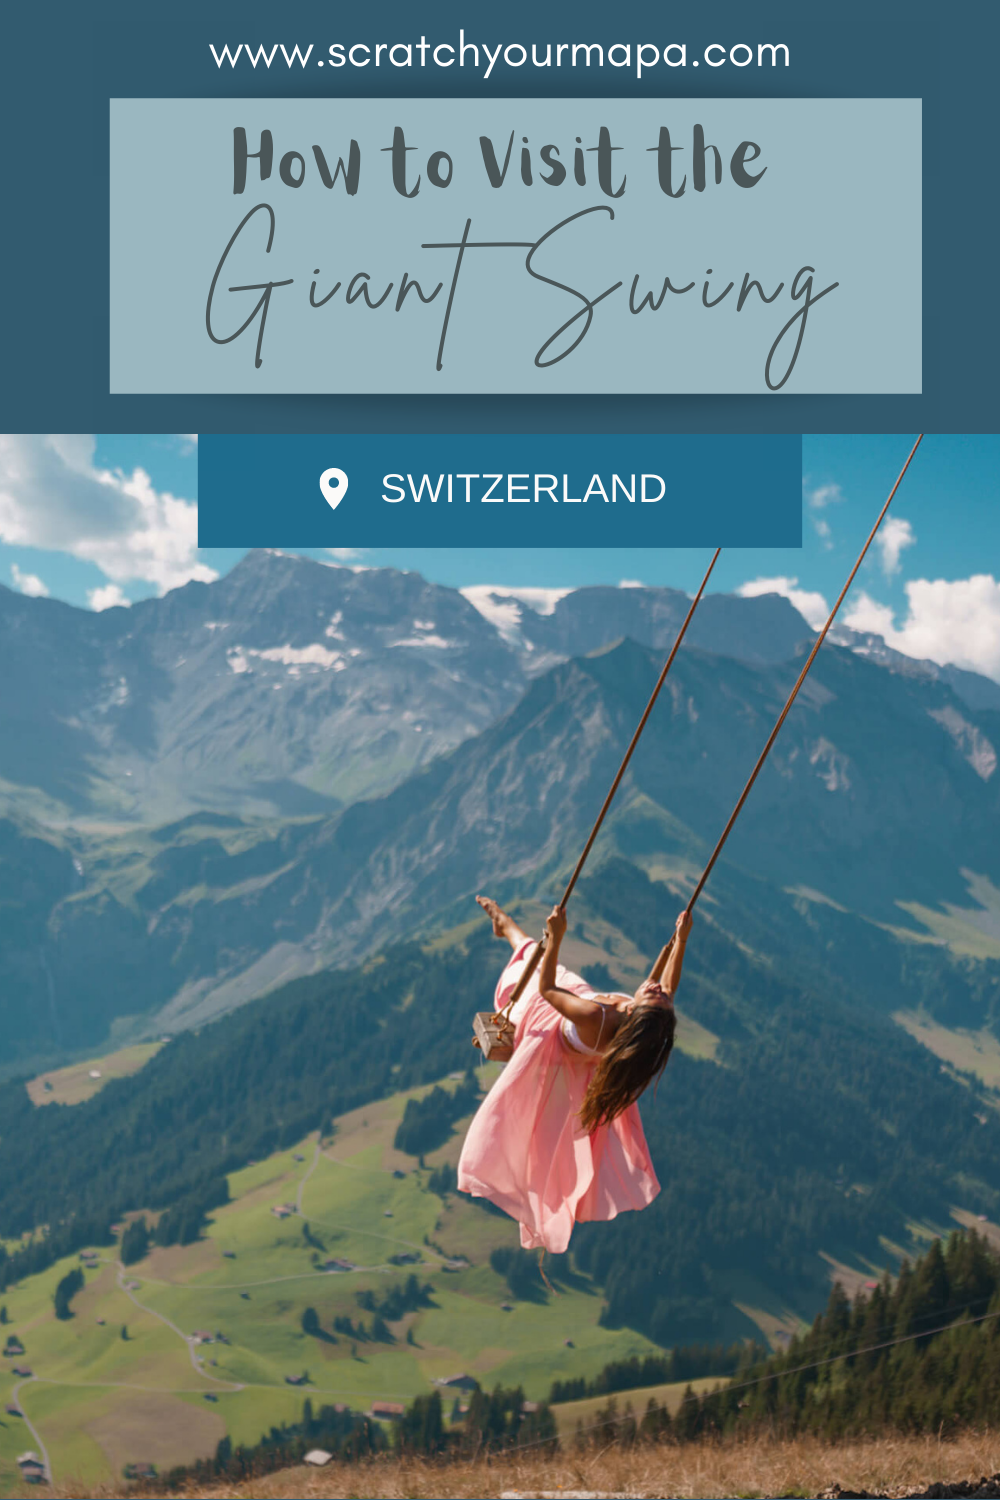 the Giant Swing in Adelboden, Switzerland